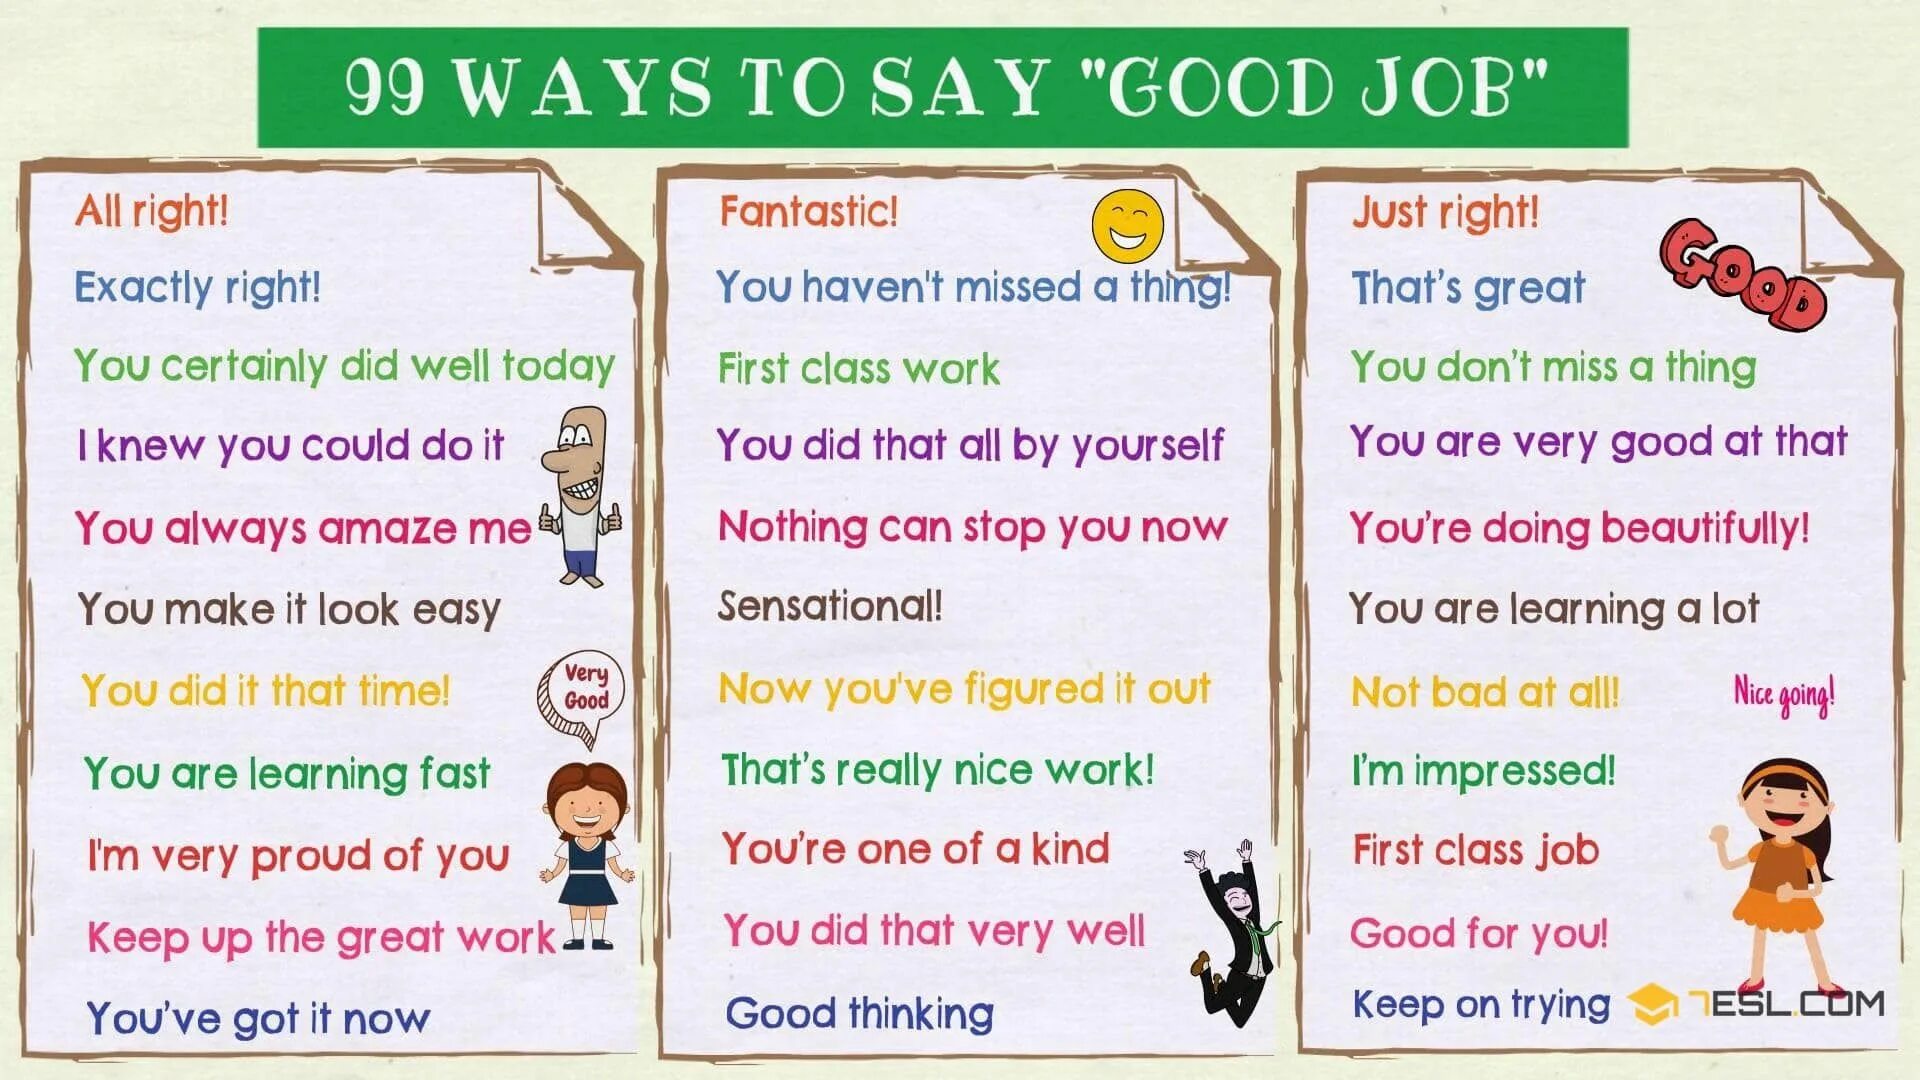 Good job синонимы. Ways to say good job. Ways to say great. Great синонимы на английском. That s really good